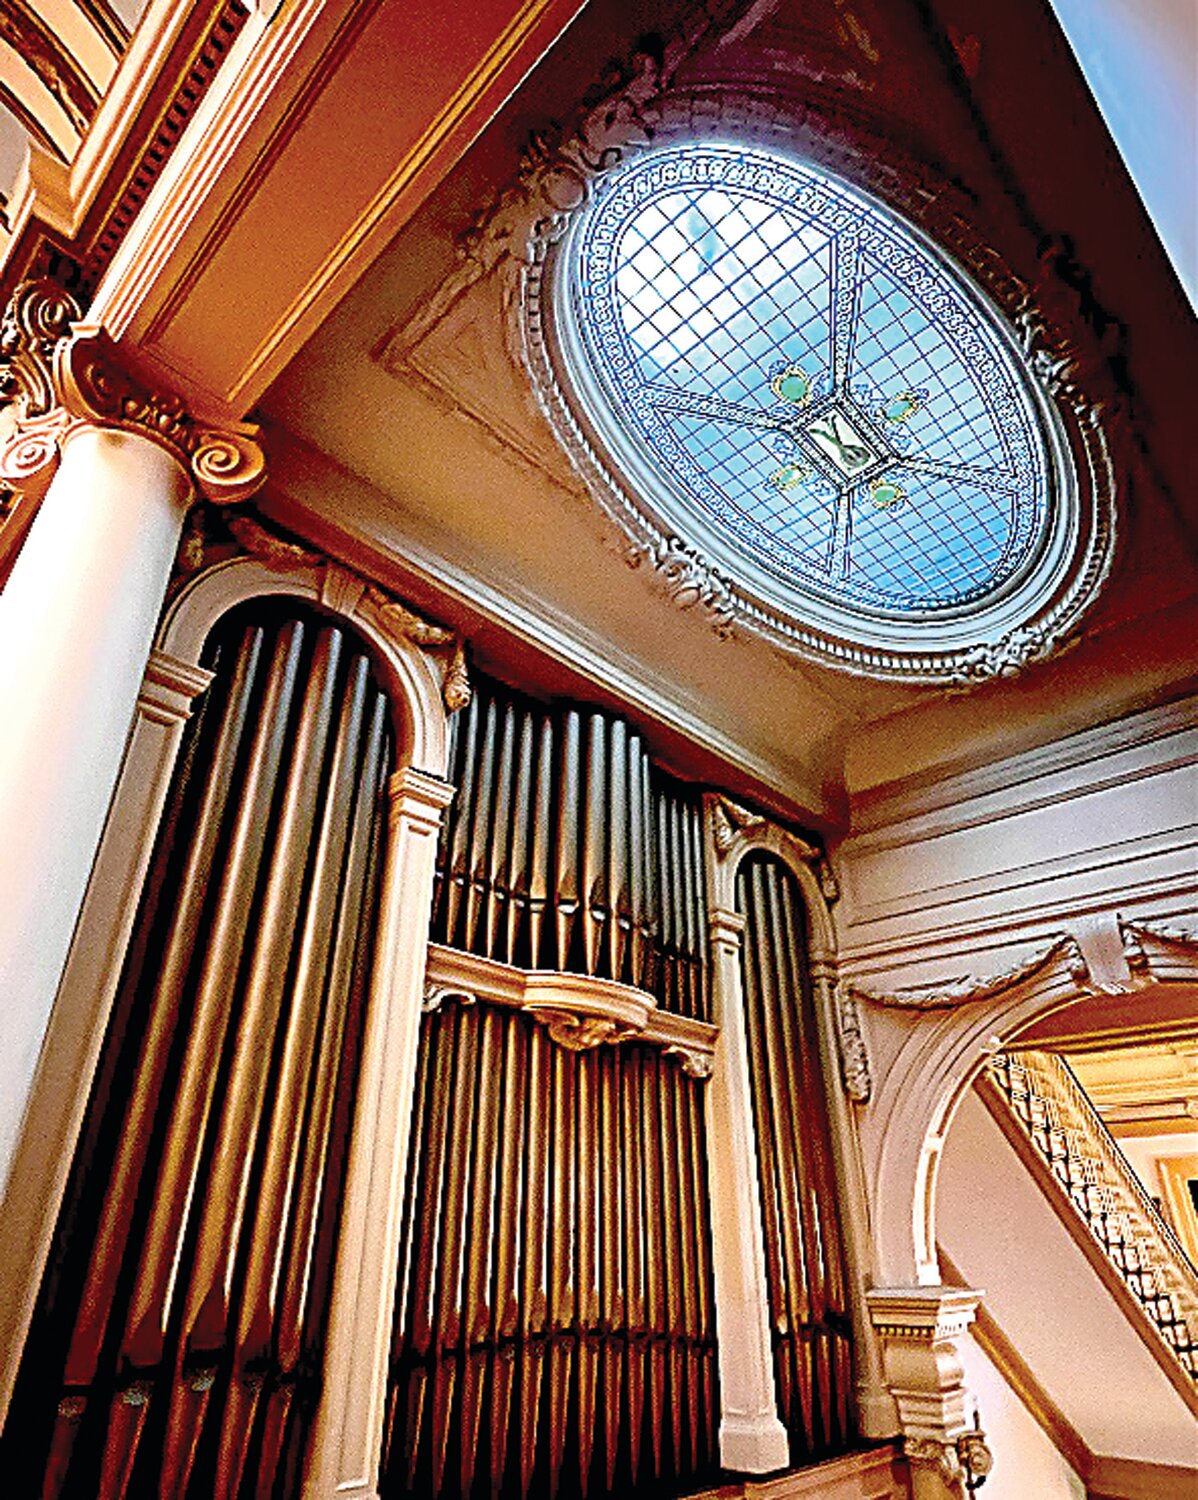 Glen Foerd’s recently restored 122-year-old Haskell pipe organ.